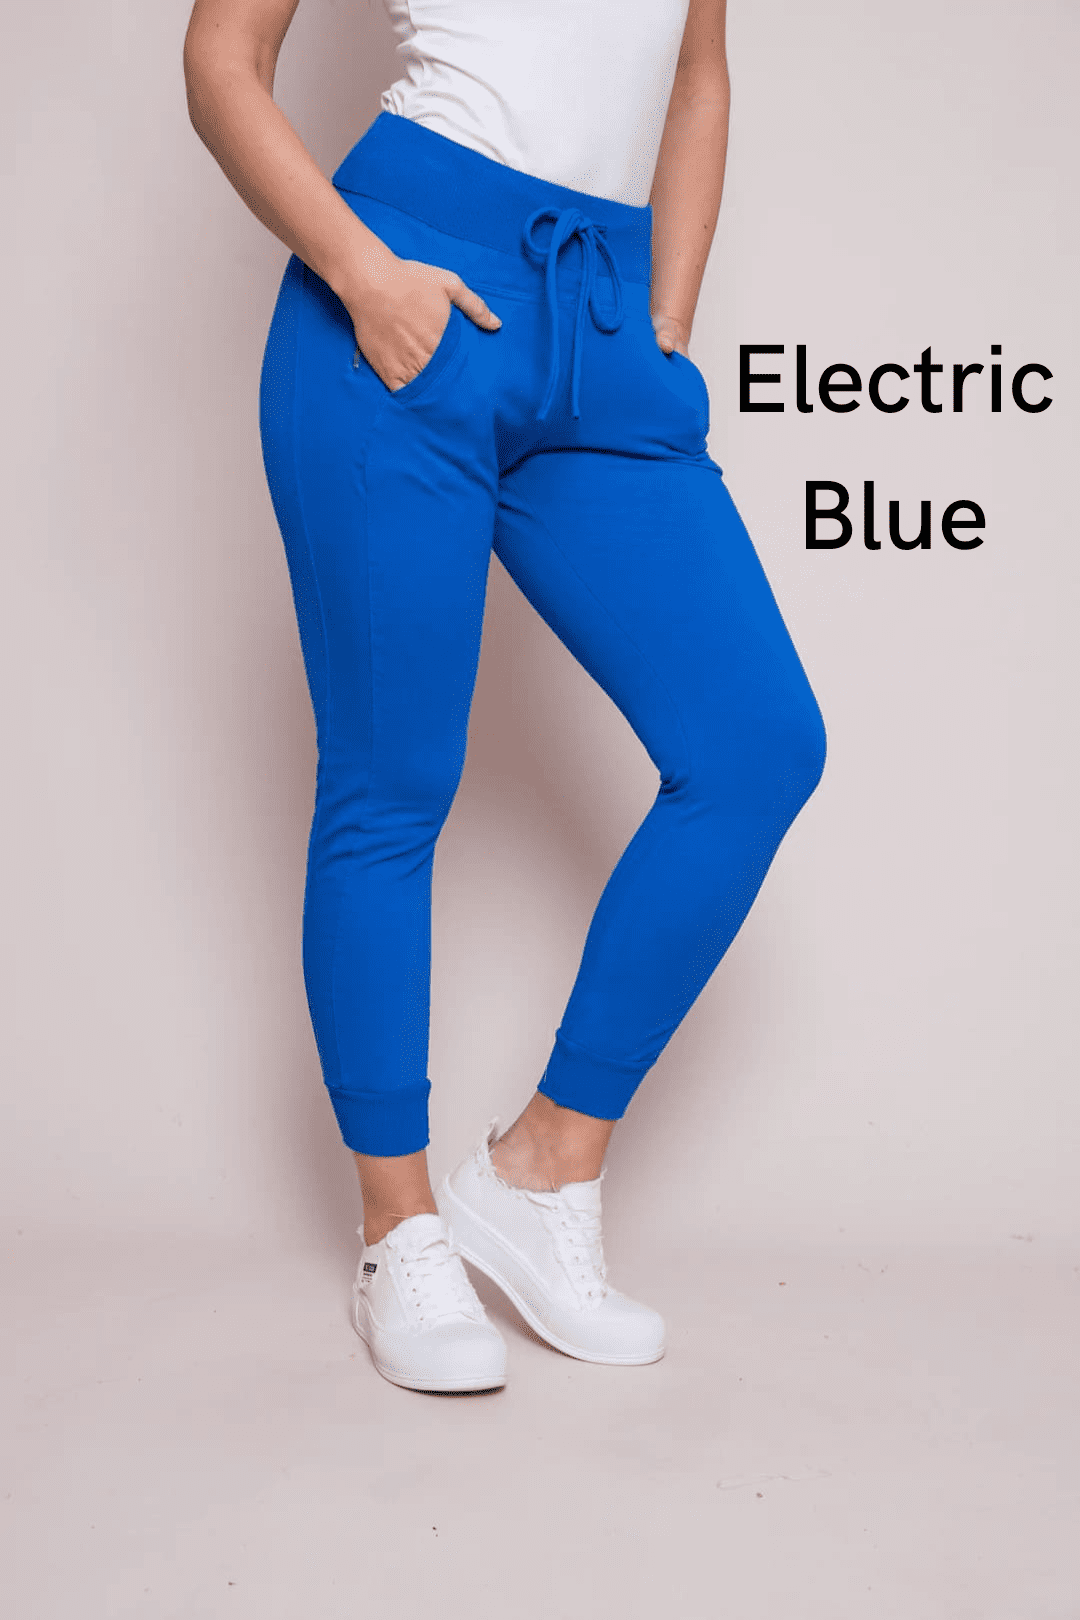 Electric Blue (1)